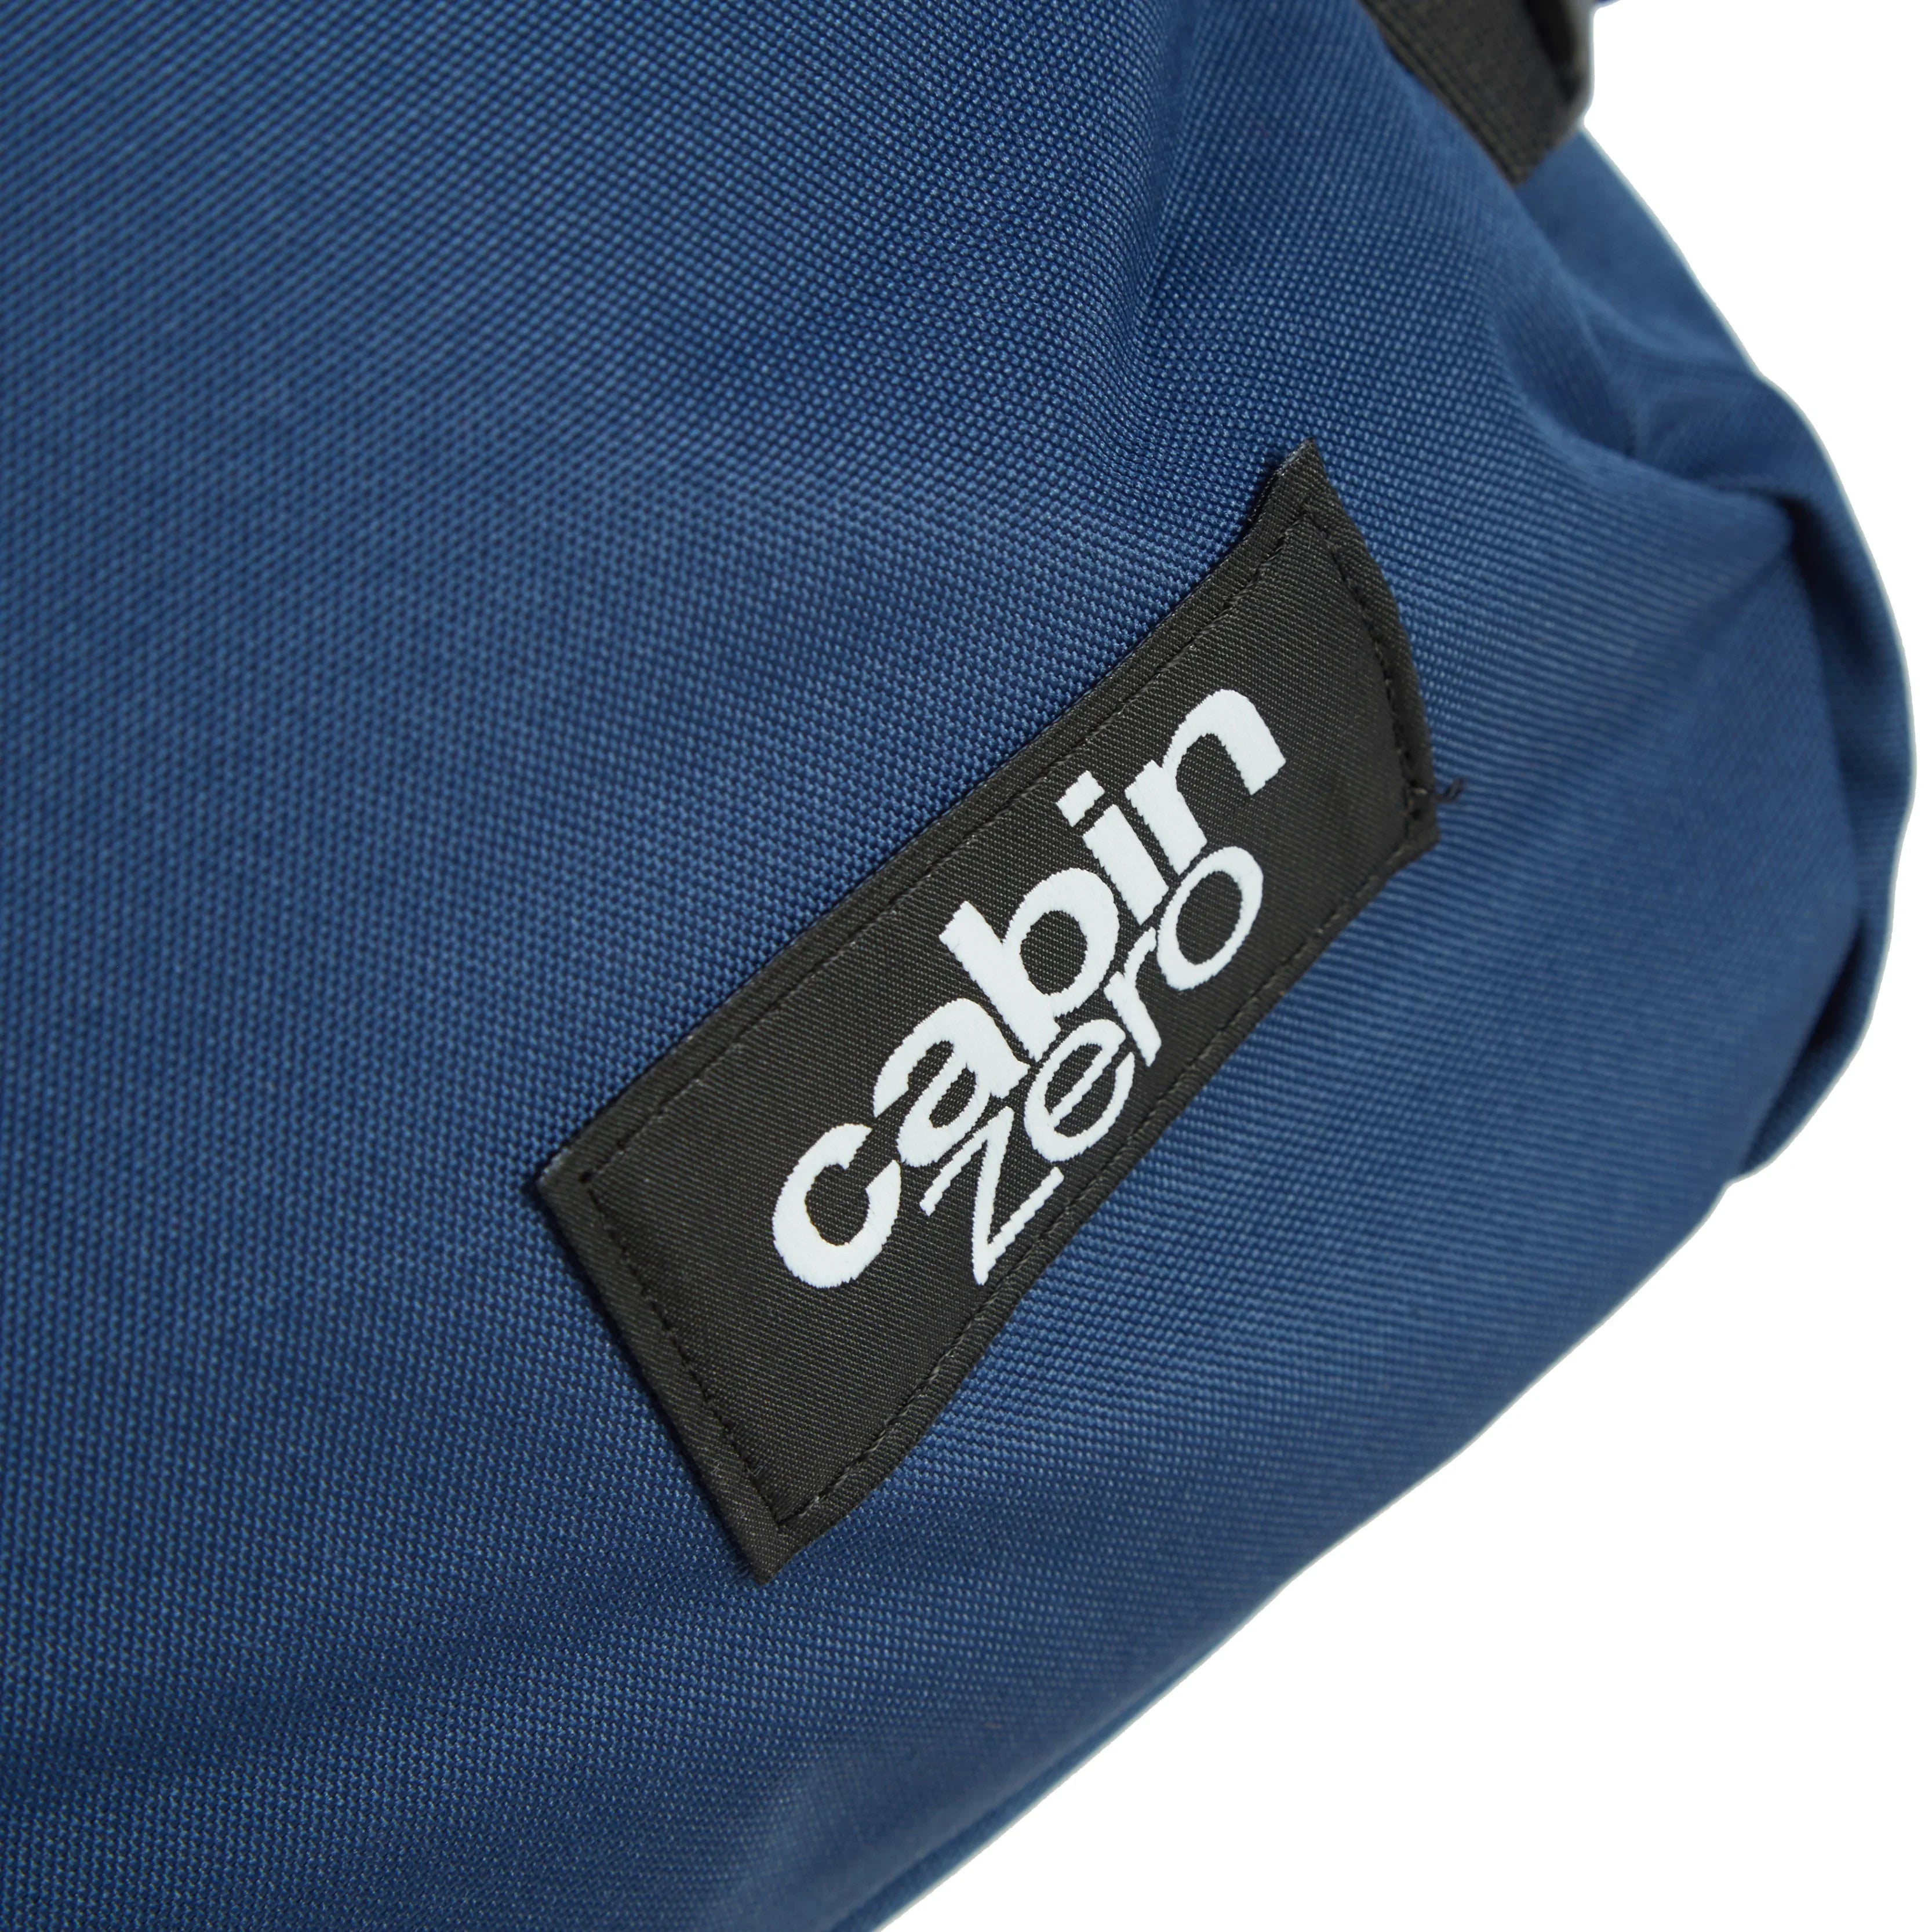 CabinZero Cabin Backpacks Classic 36L Backpack 45 cm - aruba blue